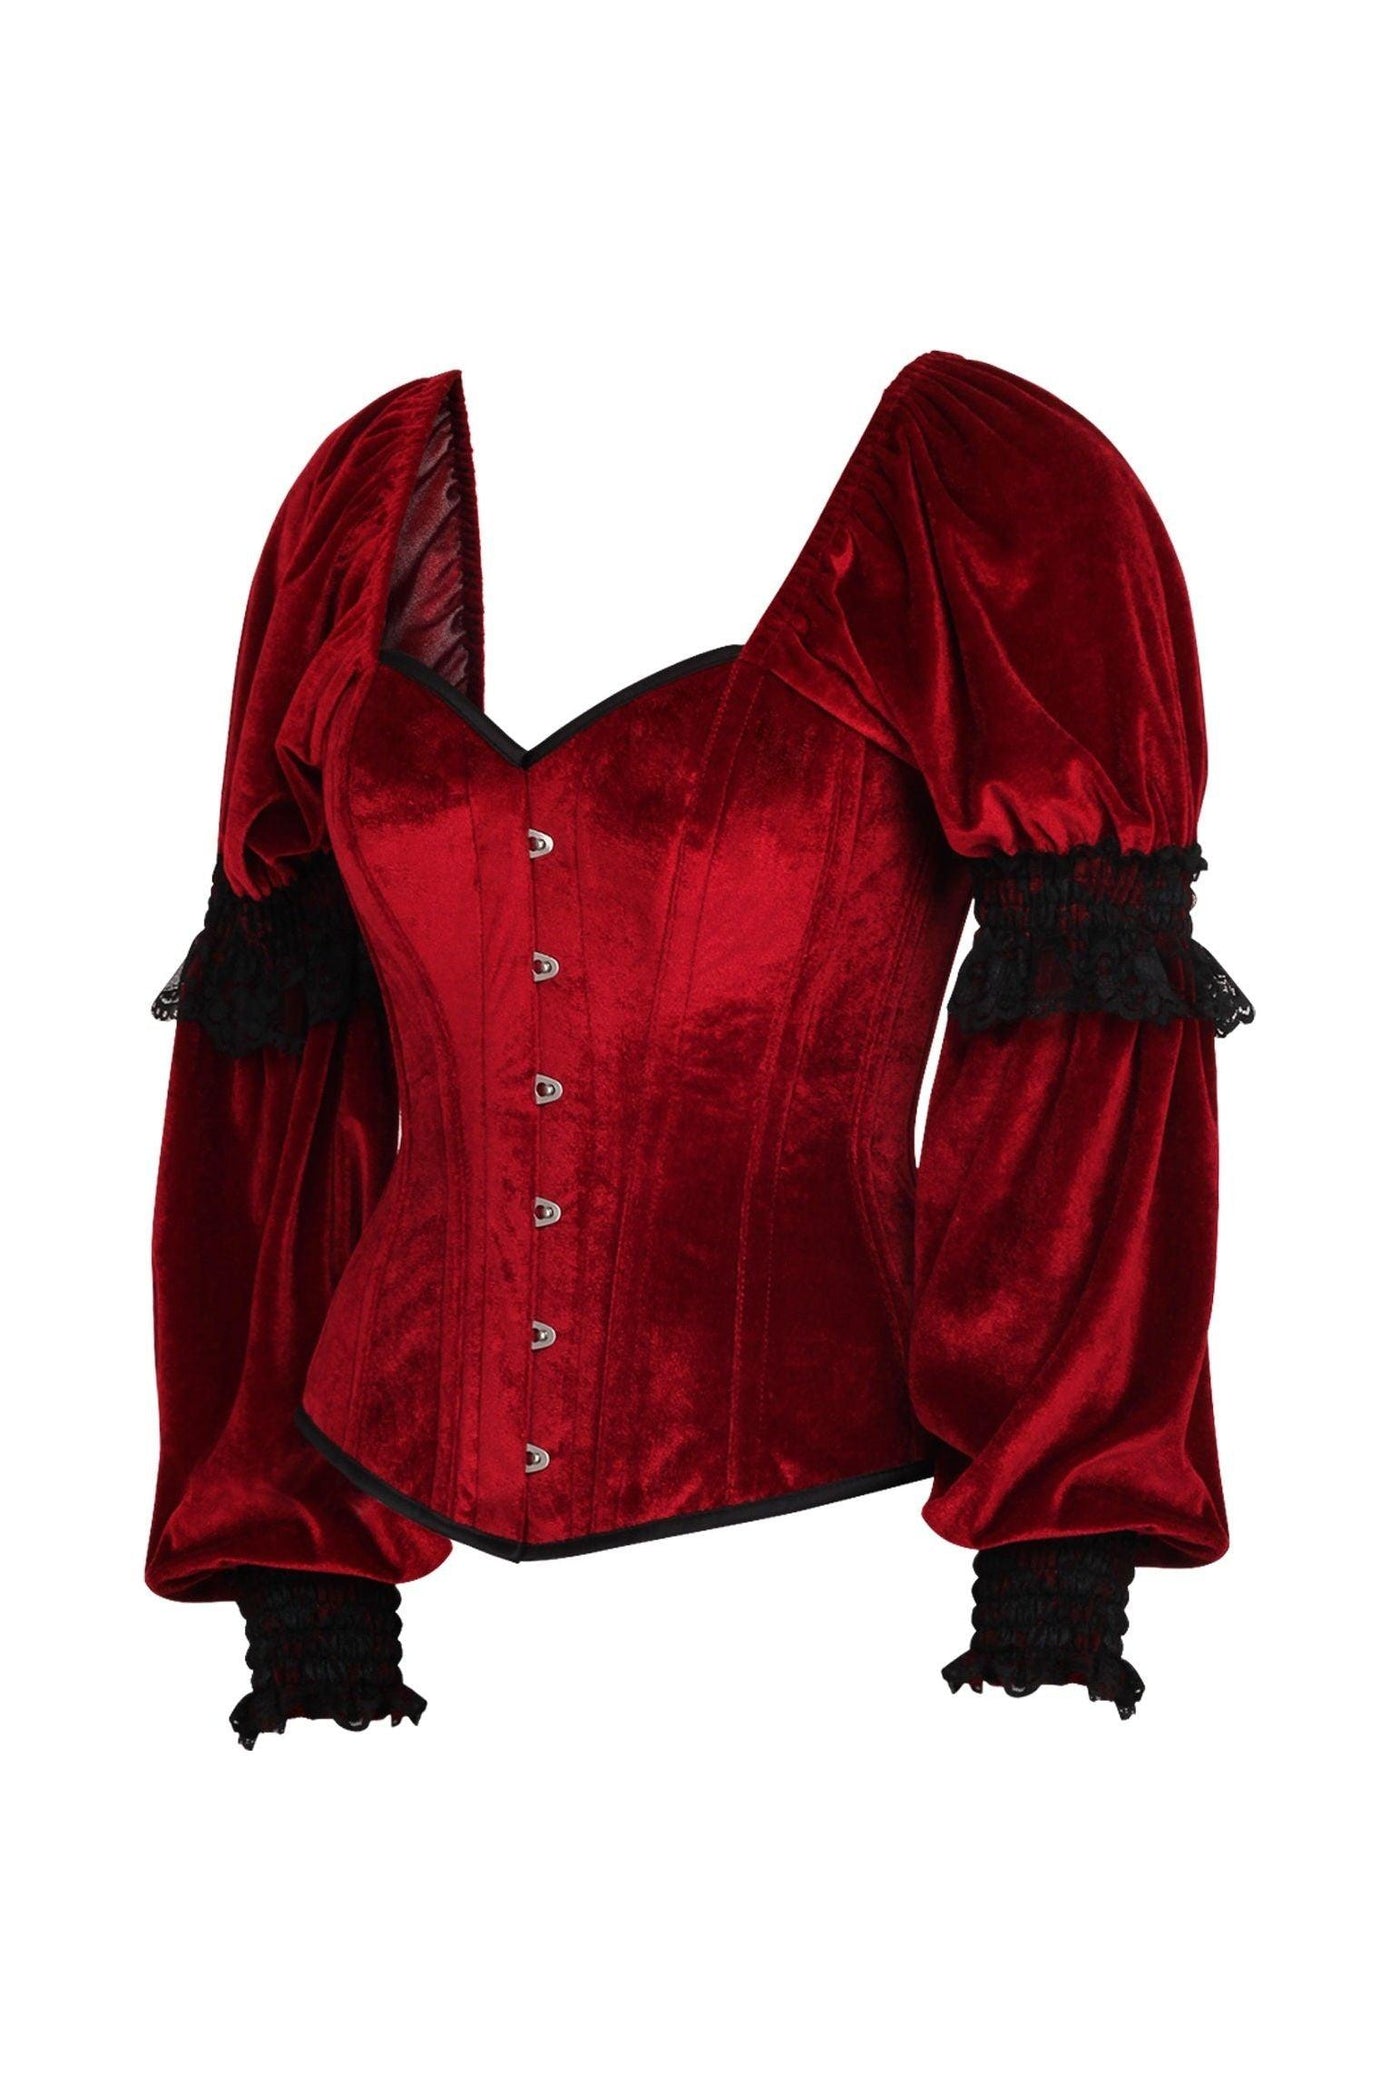 Top Drawer Dark Red Velvet Steel Boned Long Sleeve Corset - AMIClubwear